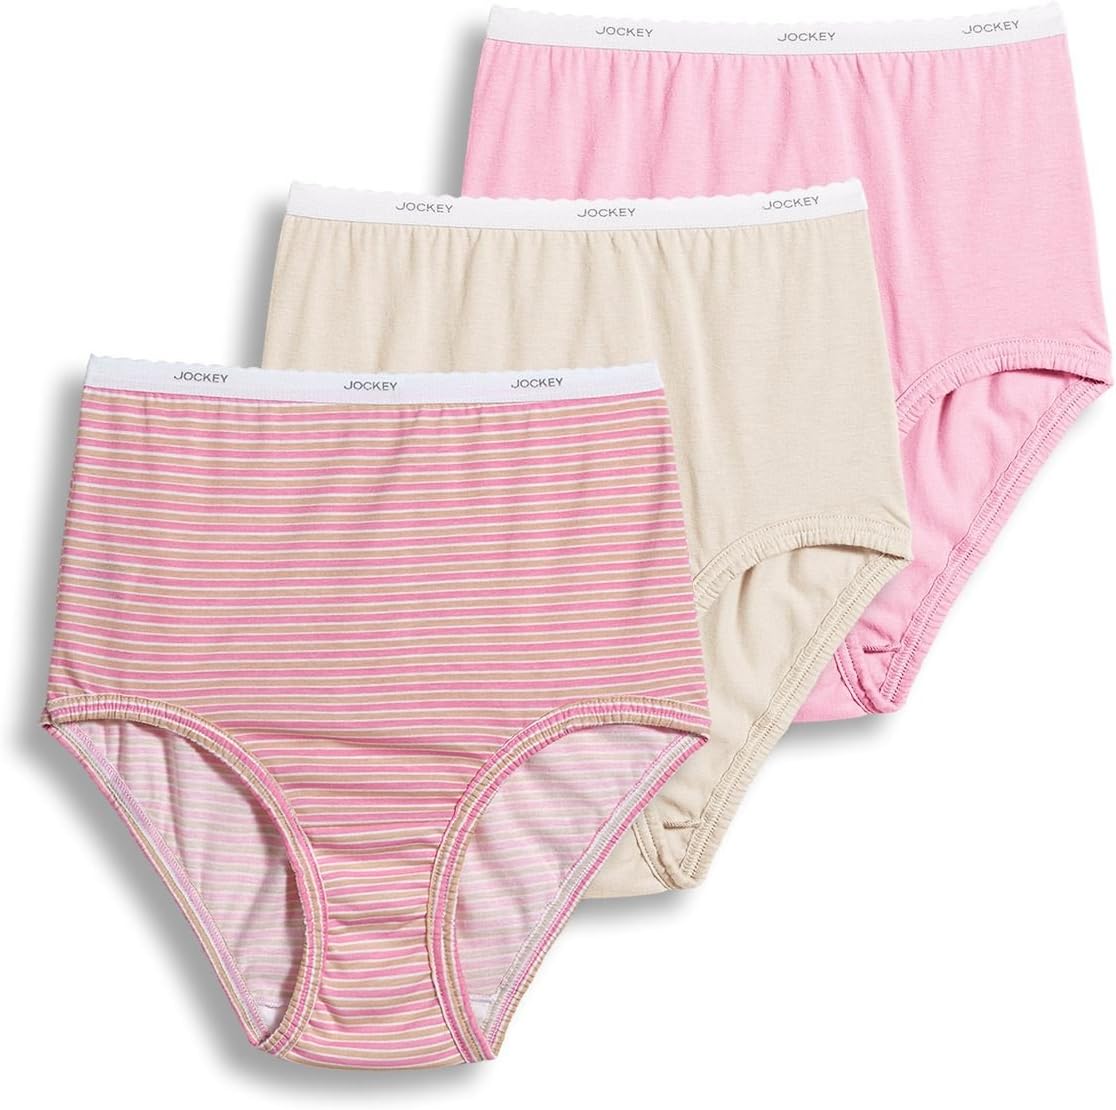 Jockey Women's Underwear Classic Brief - 3 Pack